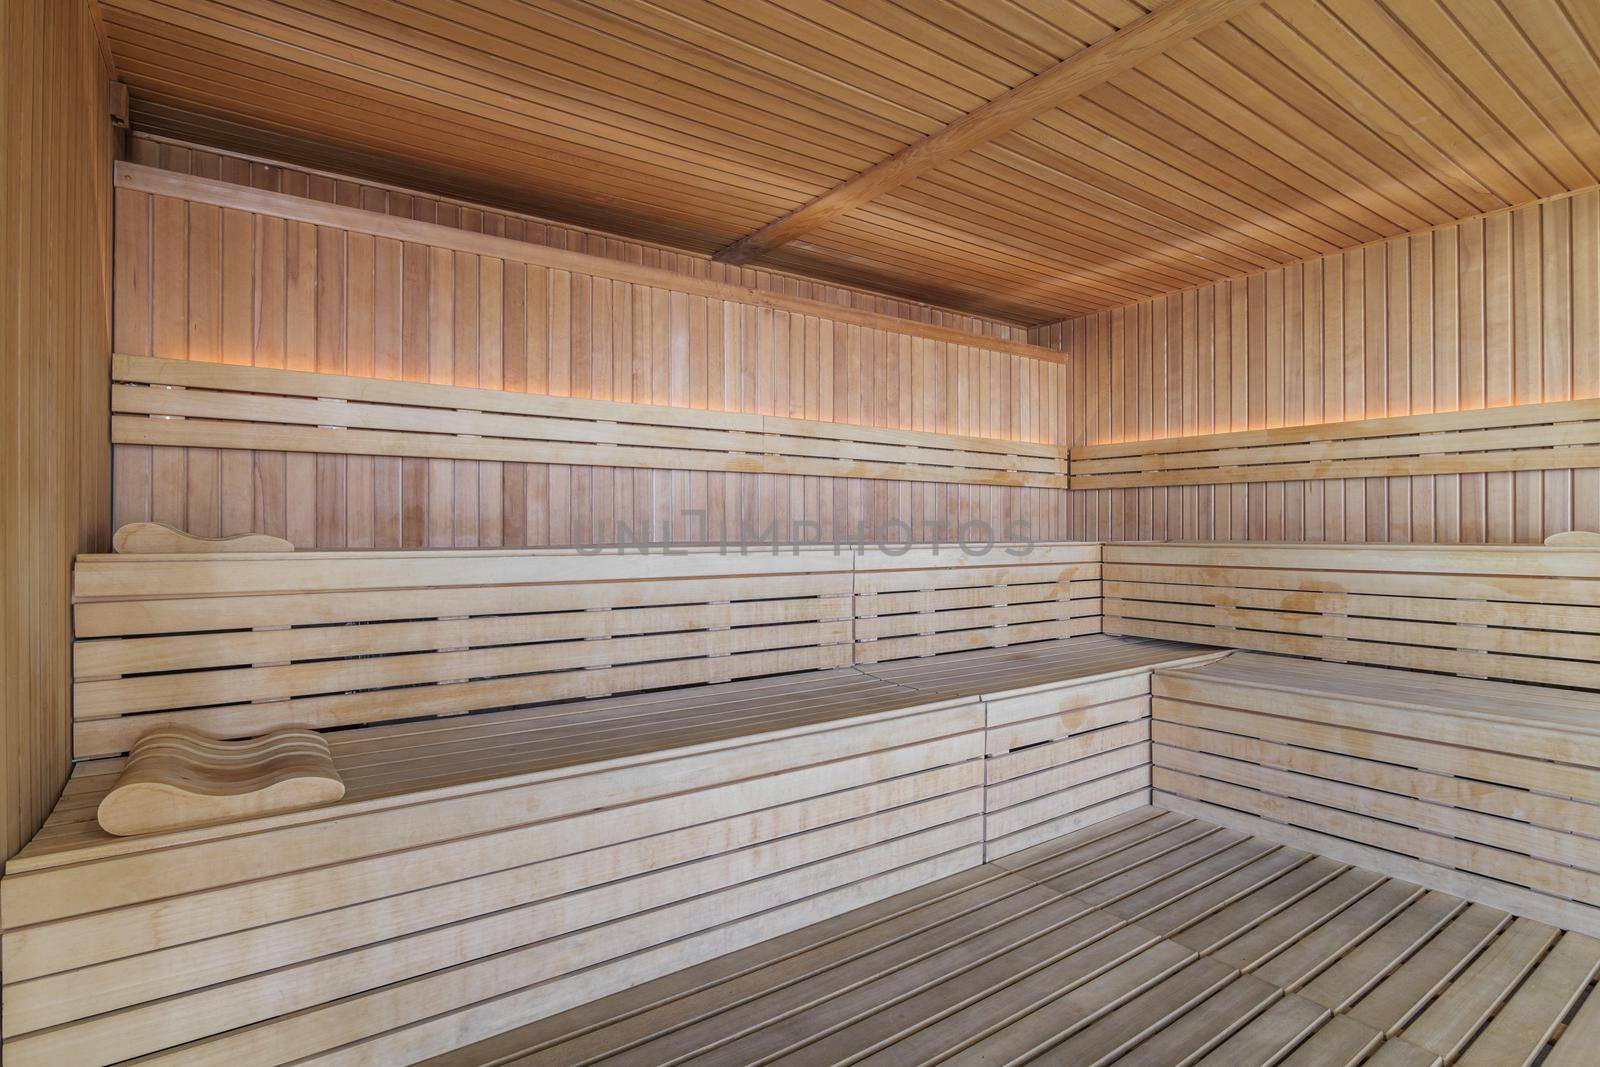 Empty Finnish sauna room. Modern interior of wooden spa cabin with dry steam by apavlin